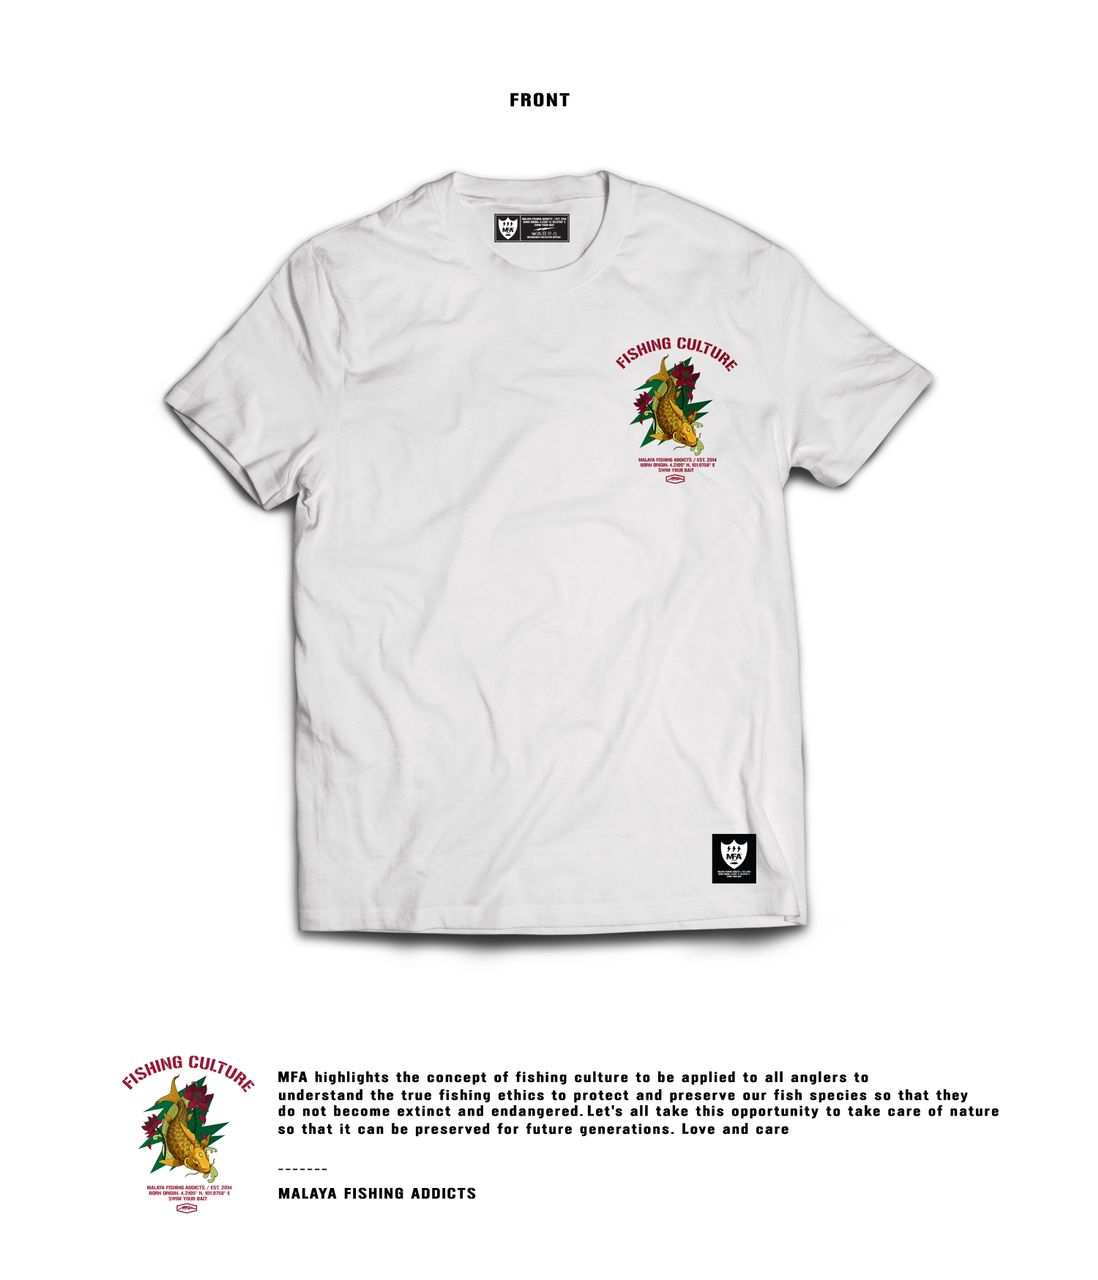 22 Fishing Culture V2 T-Shirt